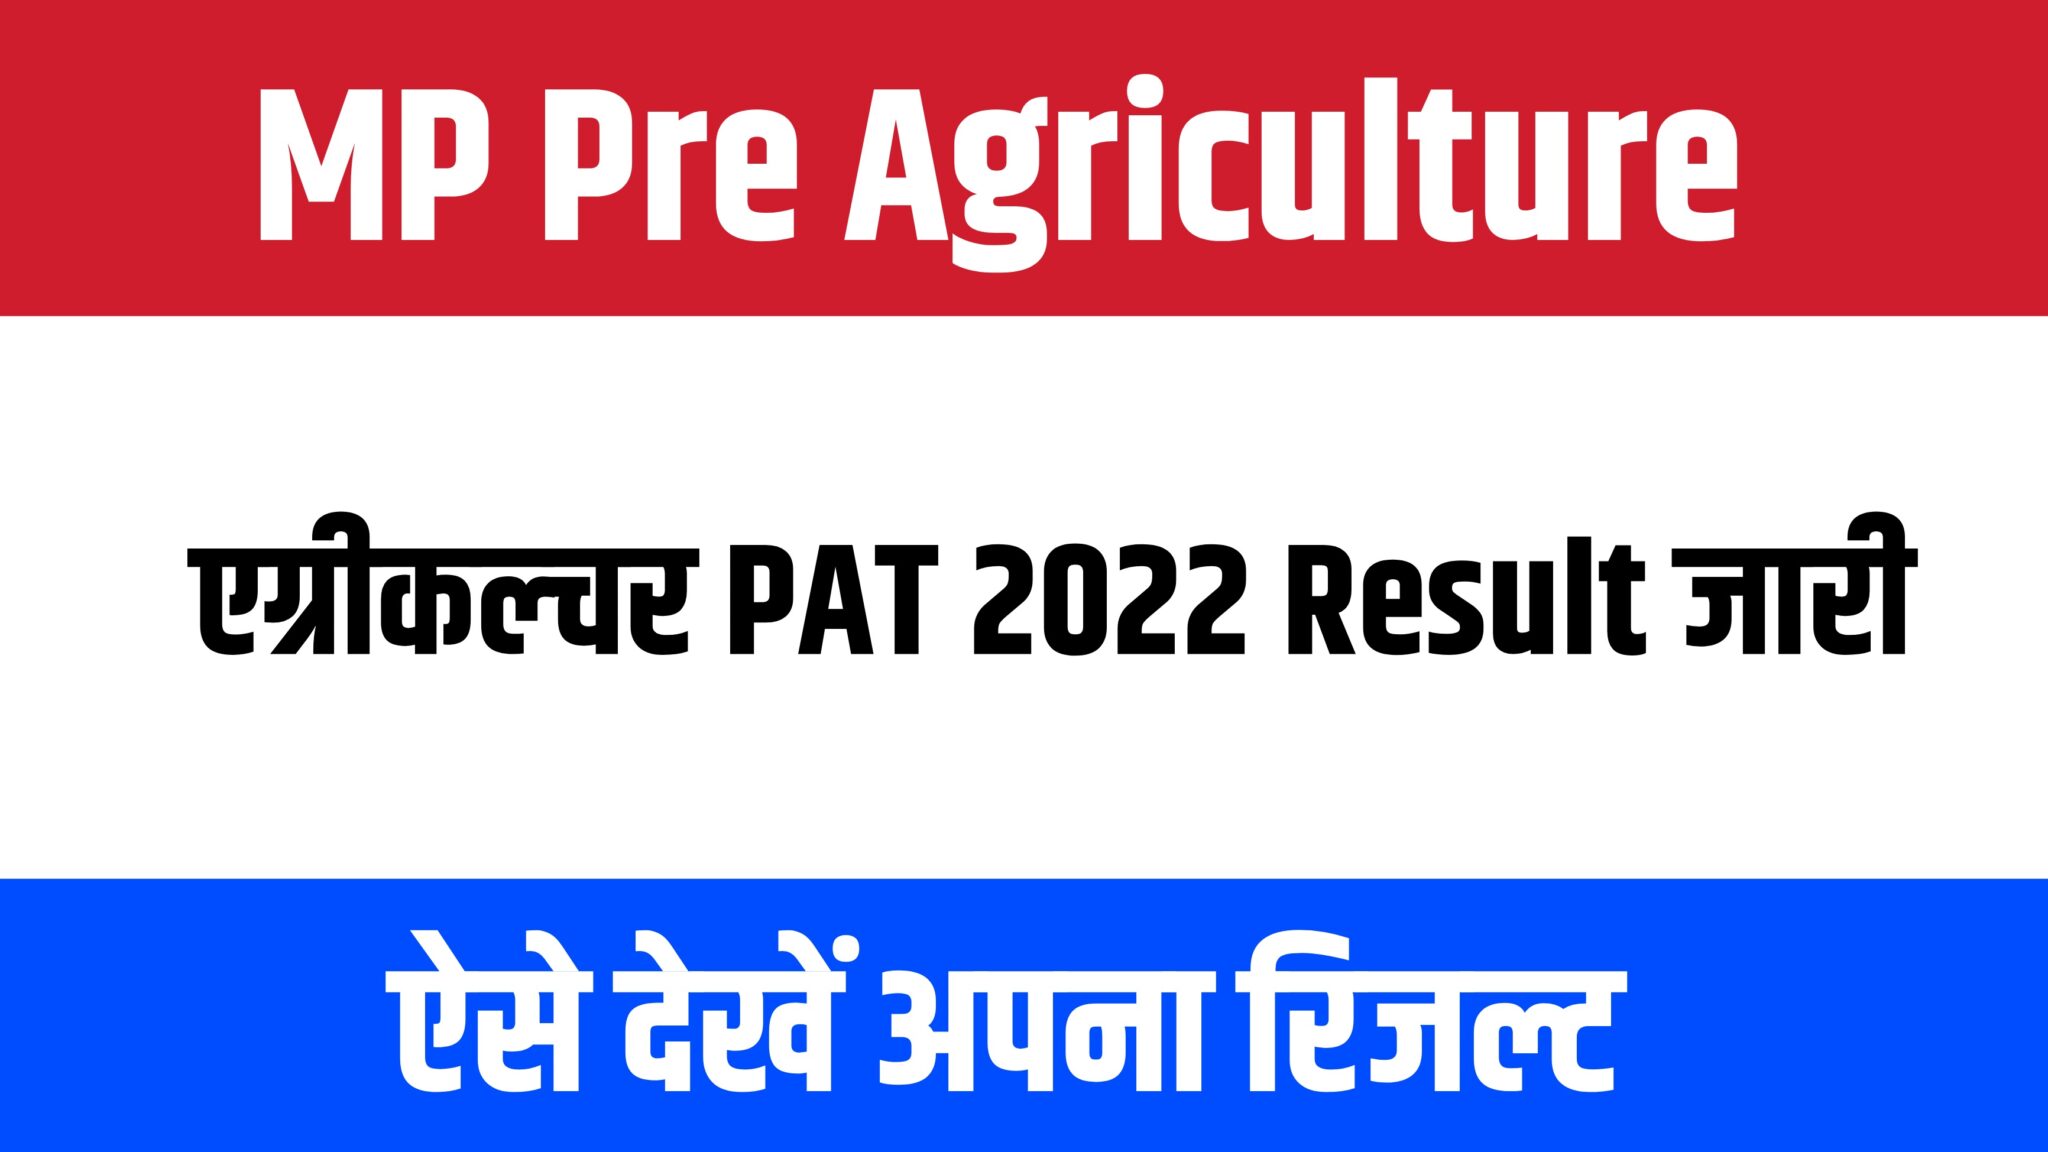 MP Pre Agriculture Test PAT 2022 Result | मध्यप्रदेश एग्रीकल्चर टेस्ट रिजल्ट